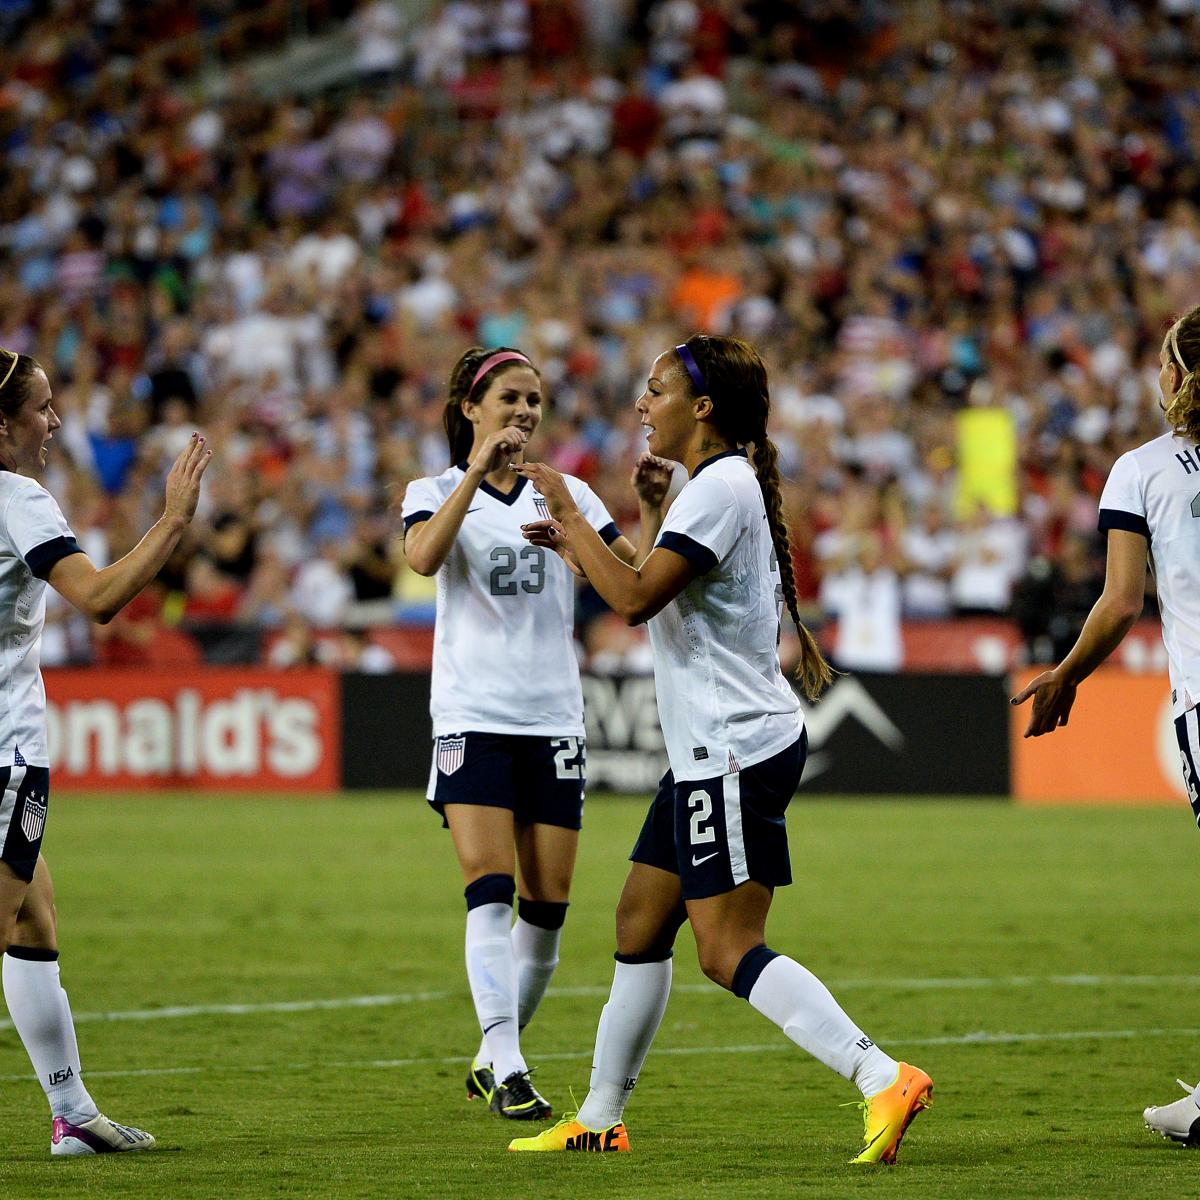 USA vs. Mexico Women's Soccer: Score, Grades and Post-Match Analysis